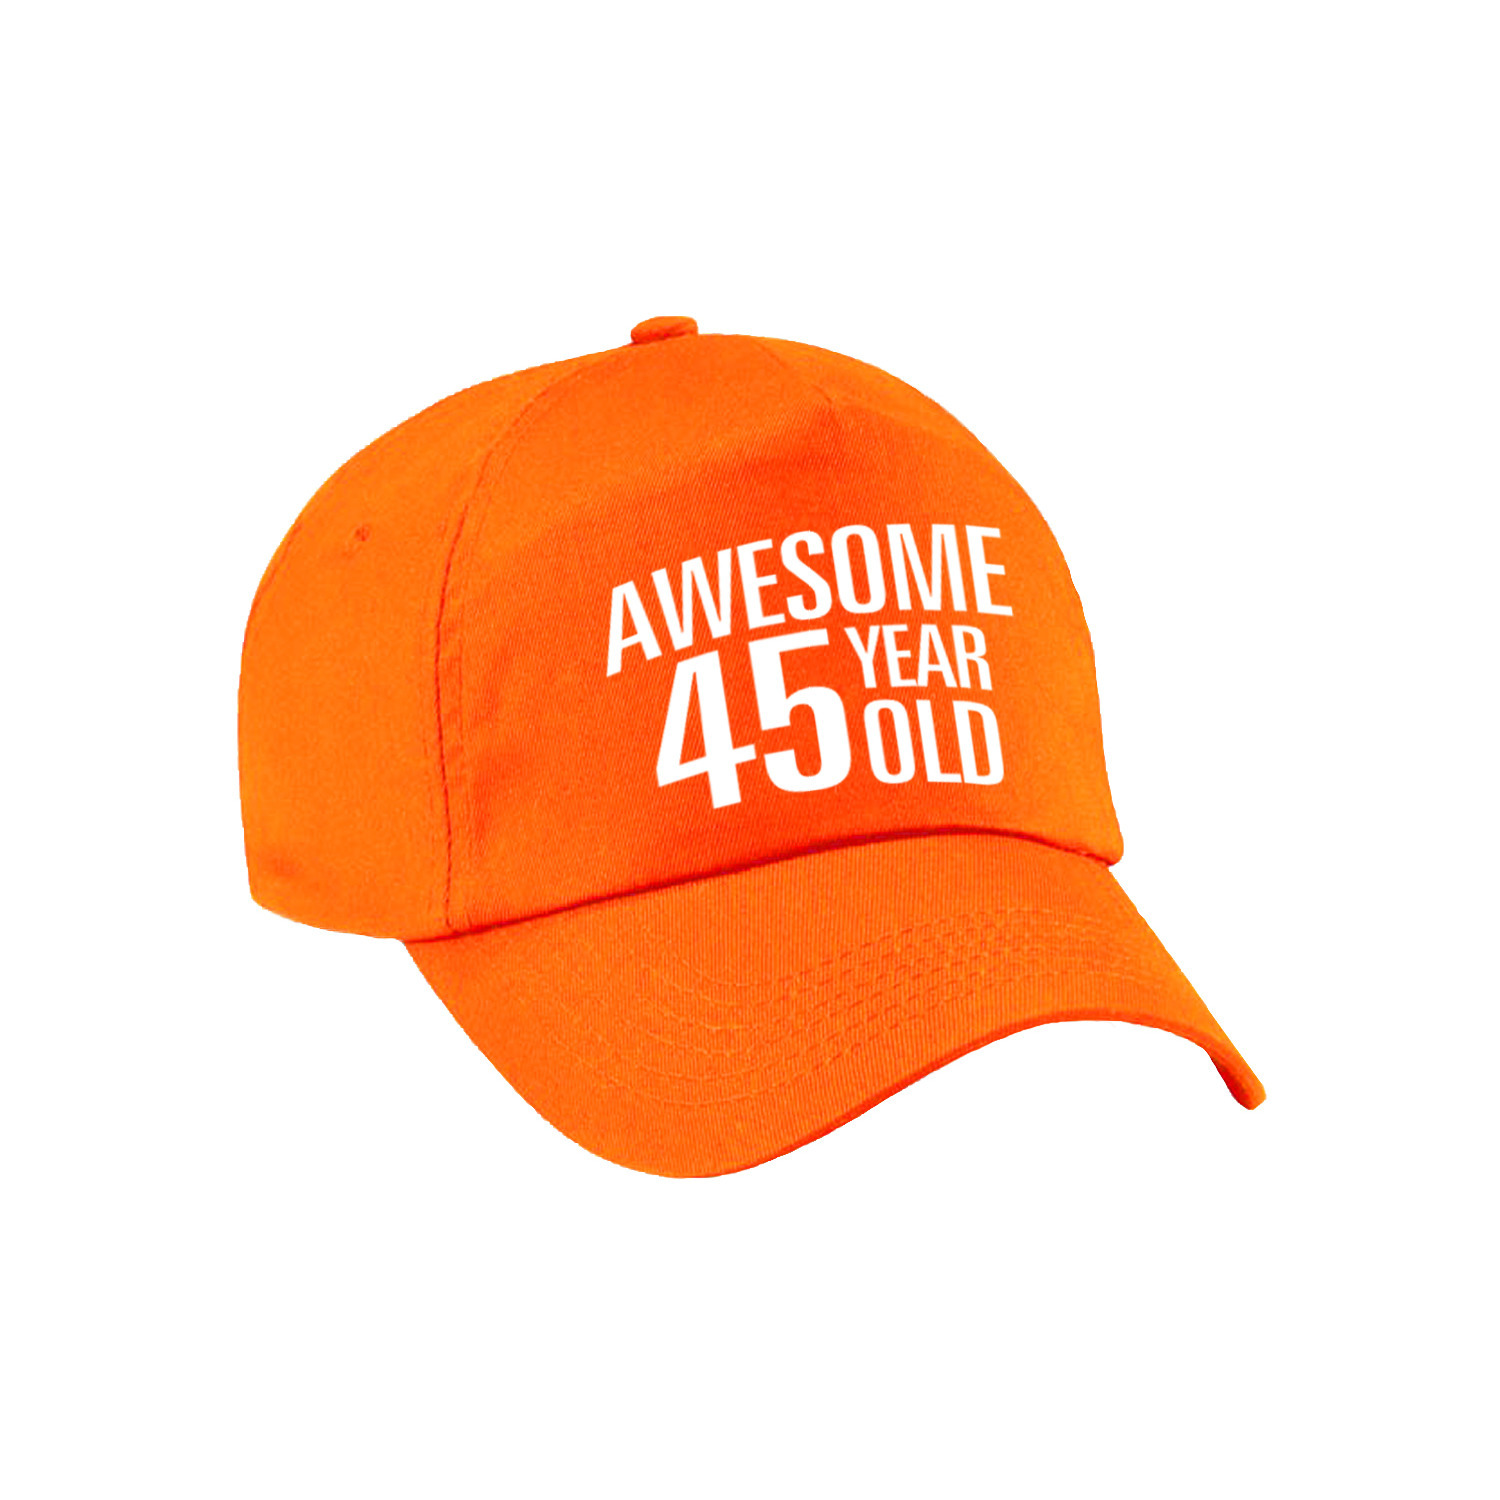 Awesome 45 year old verjaardag pet - cap oranje voor dames en heren